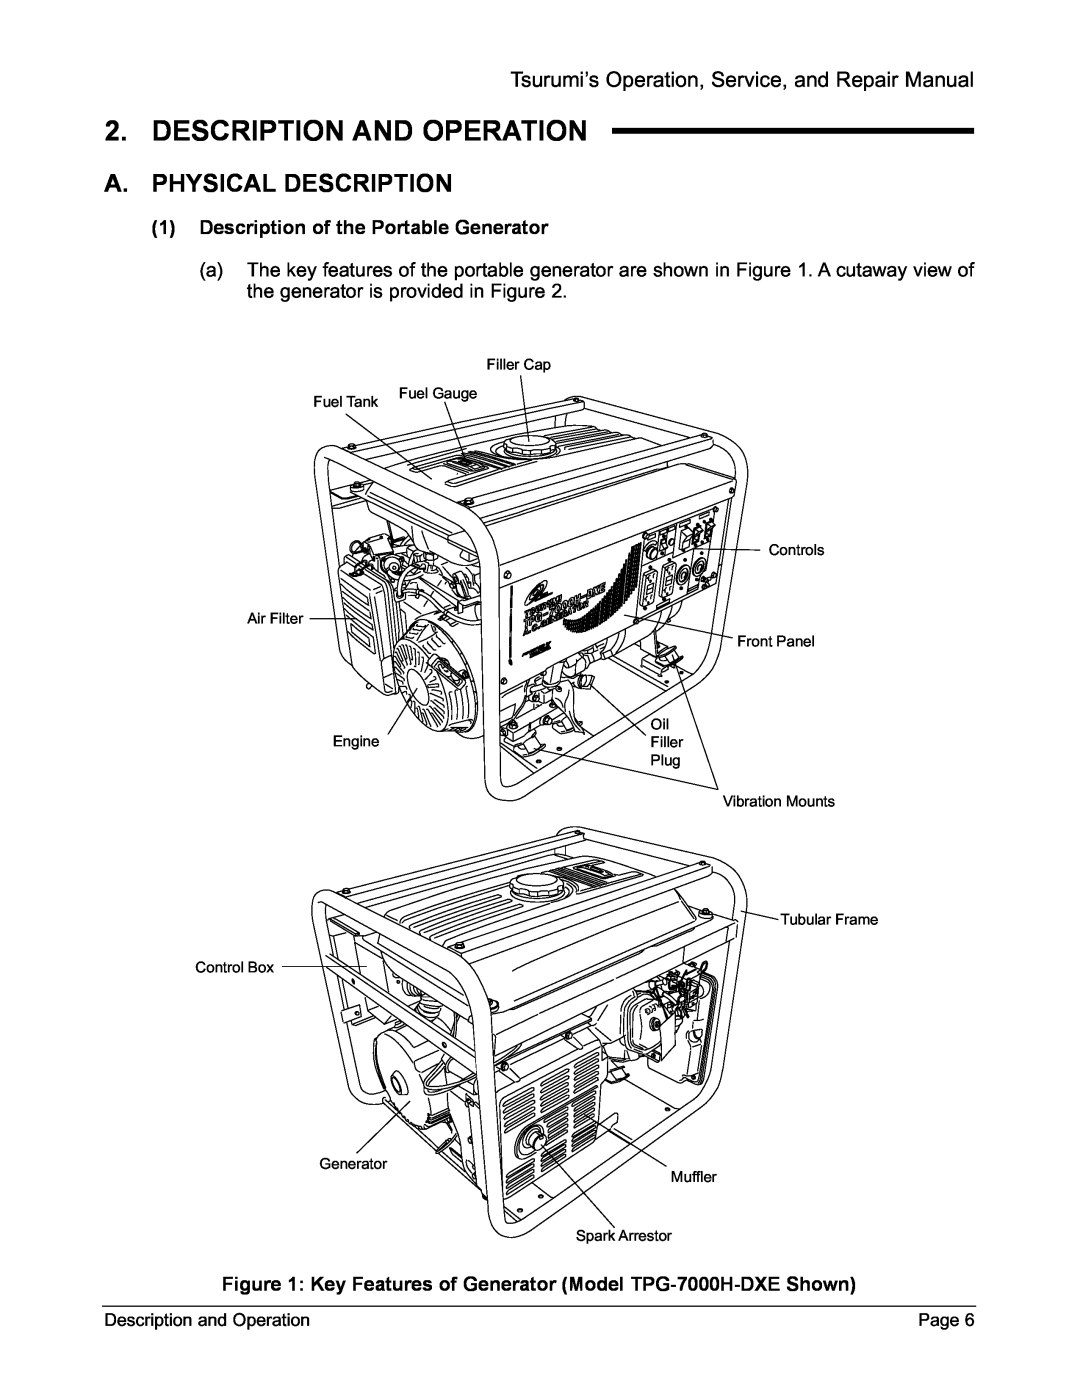 Honda Power Equipment TPG-7000H-DXE, TPG-2900H-DX, TPG-6000H-DX manual Description And Operation, A.Physical Description 